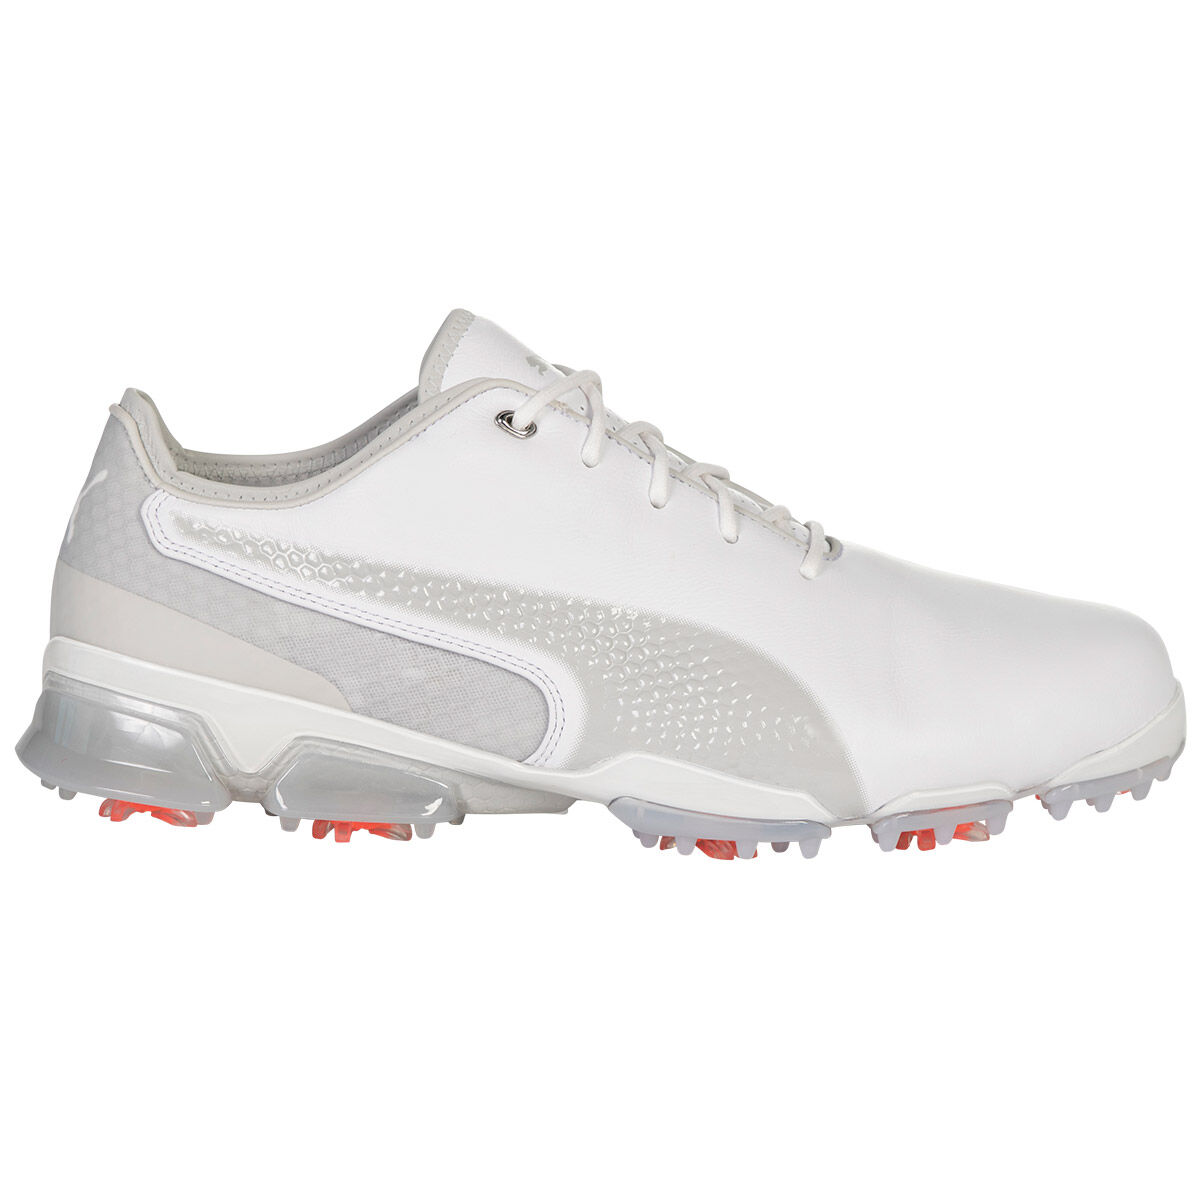 PUMA Golf IGNITE PROADAPT Shoes from 